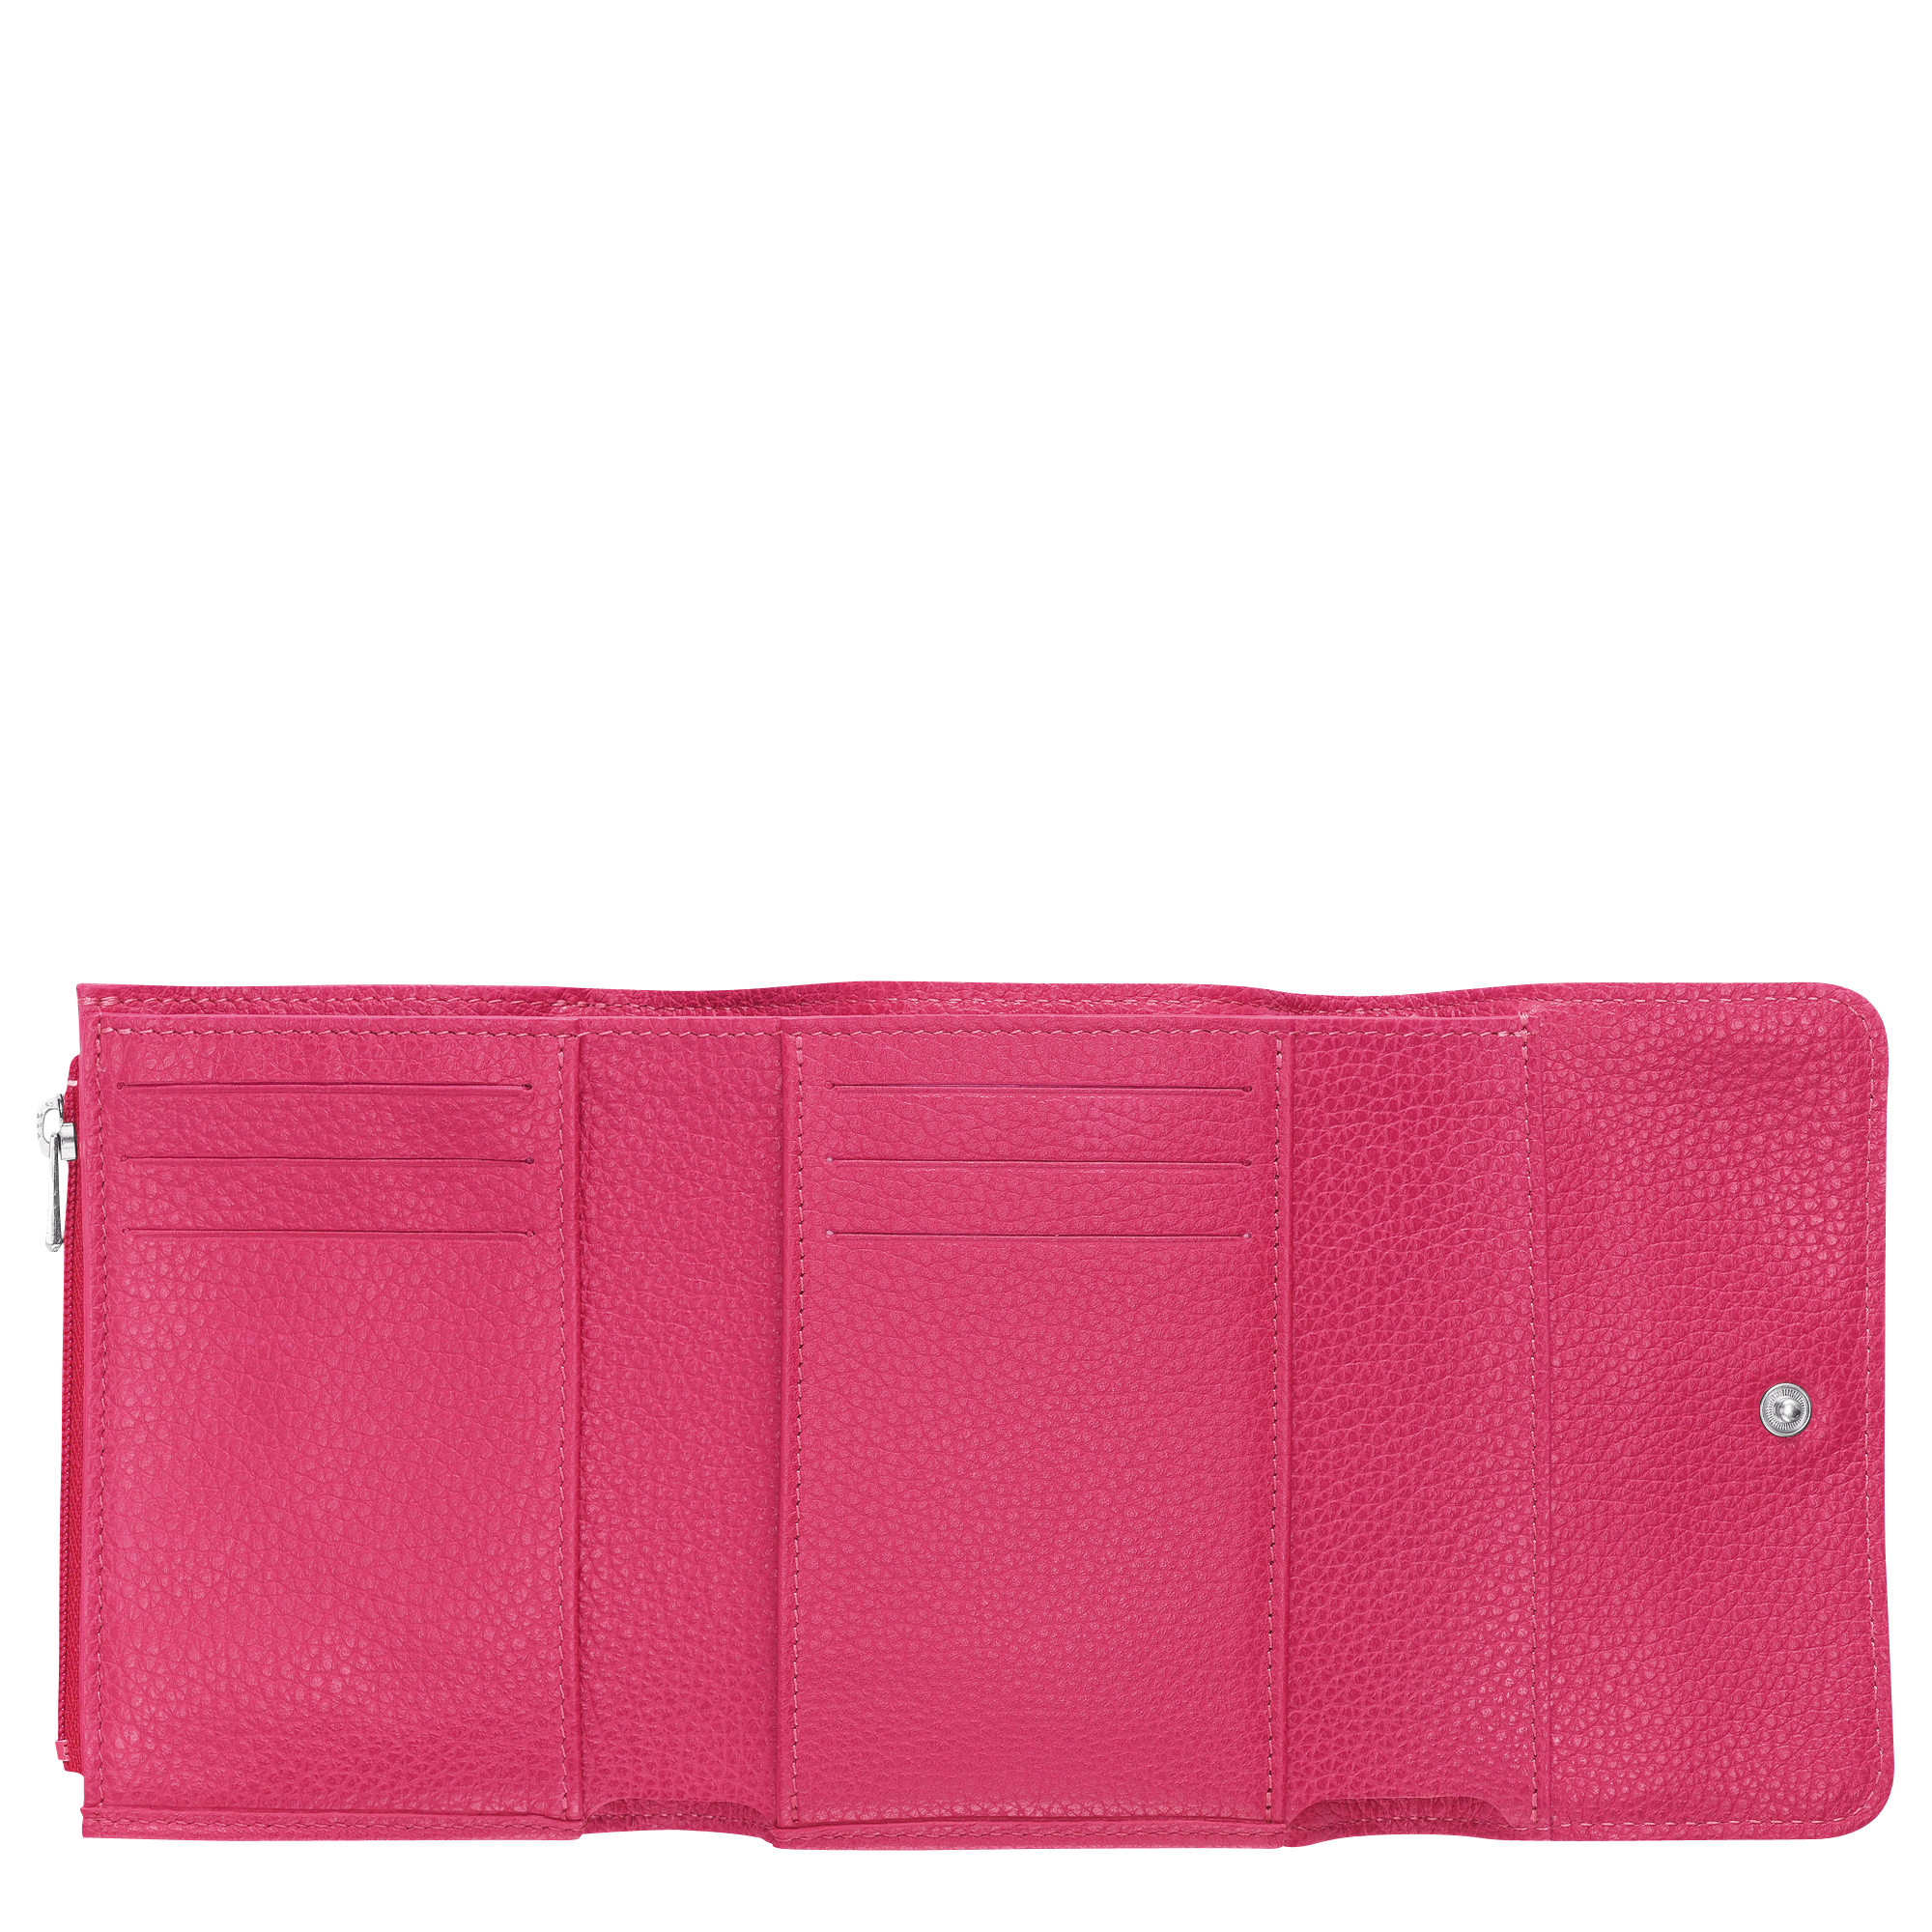 Compact wallet Le Foulonné Pink/Silver 